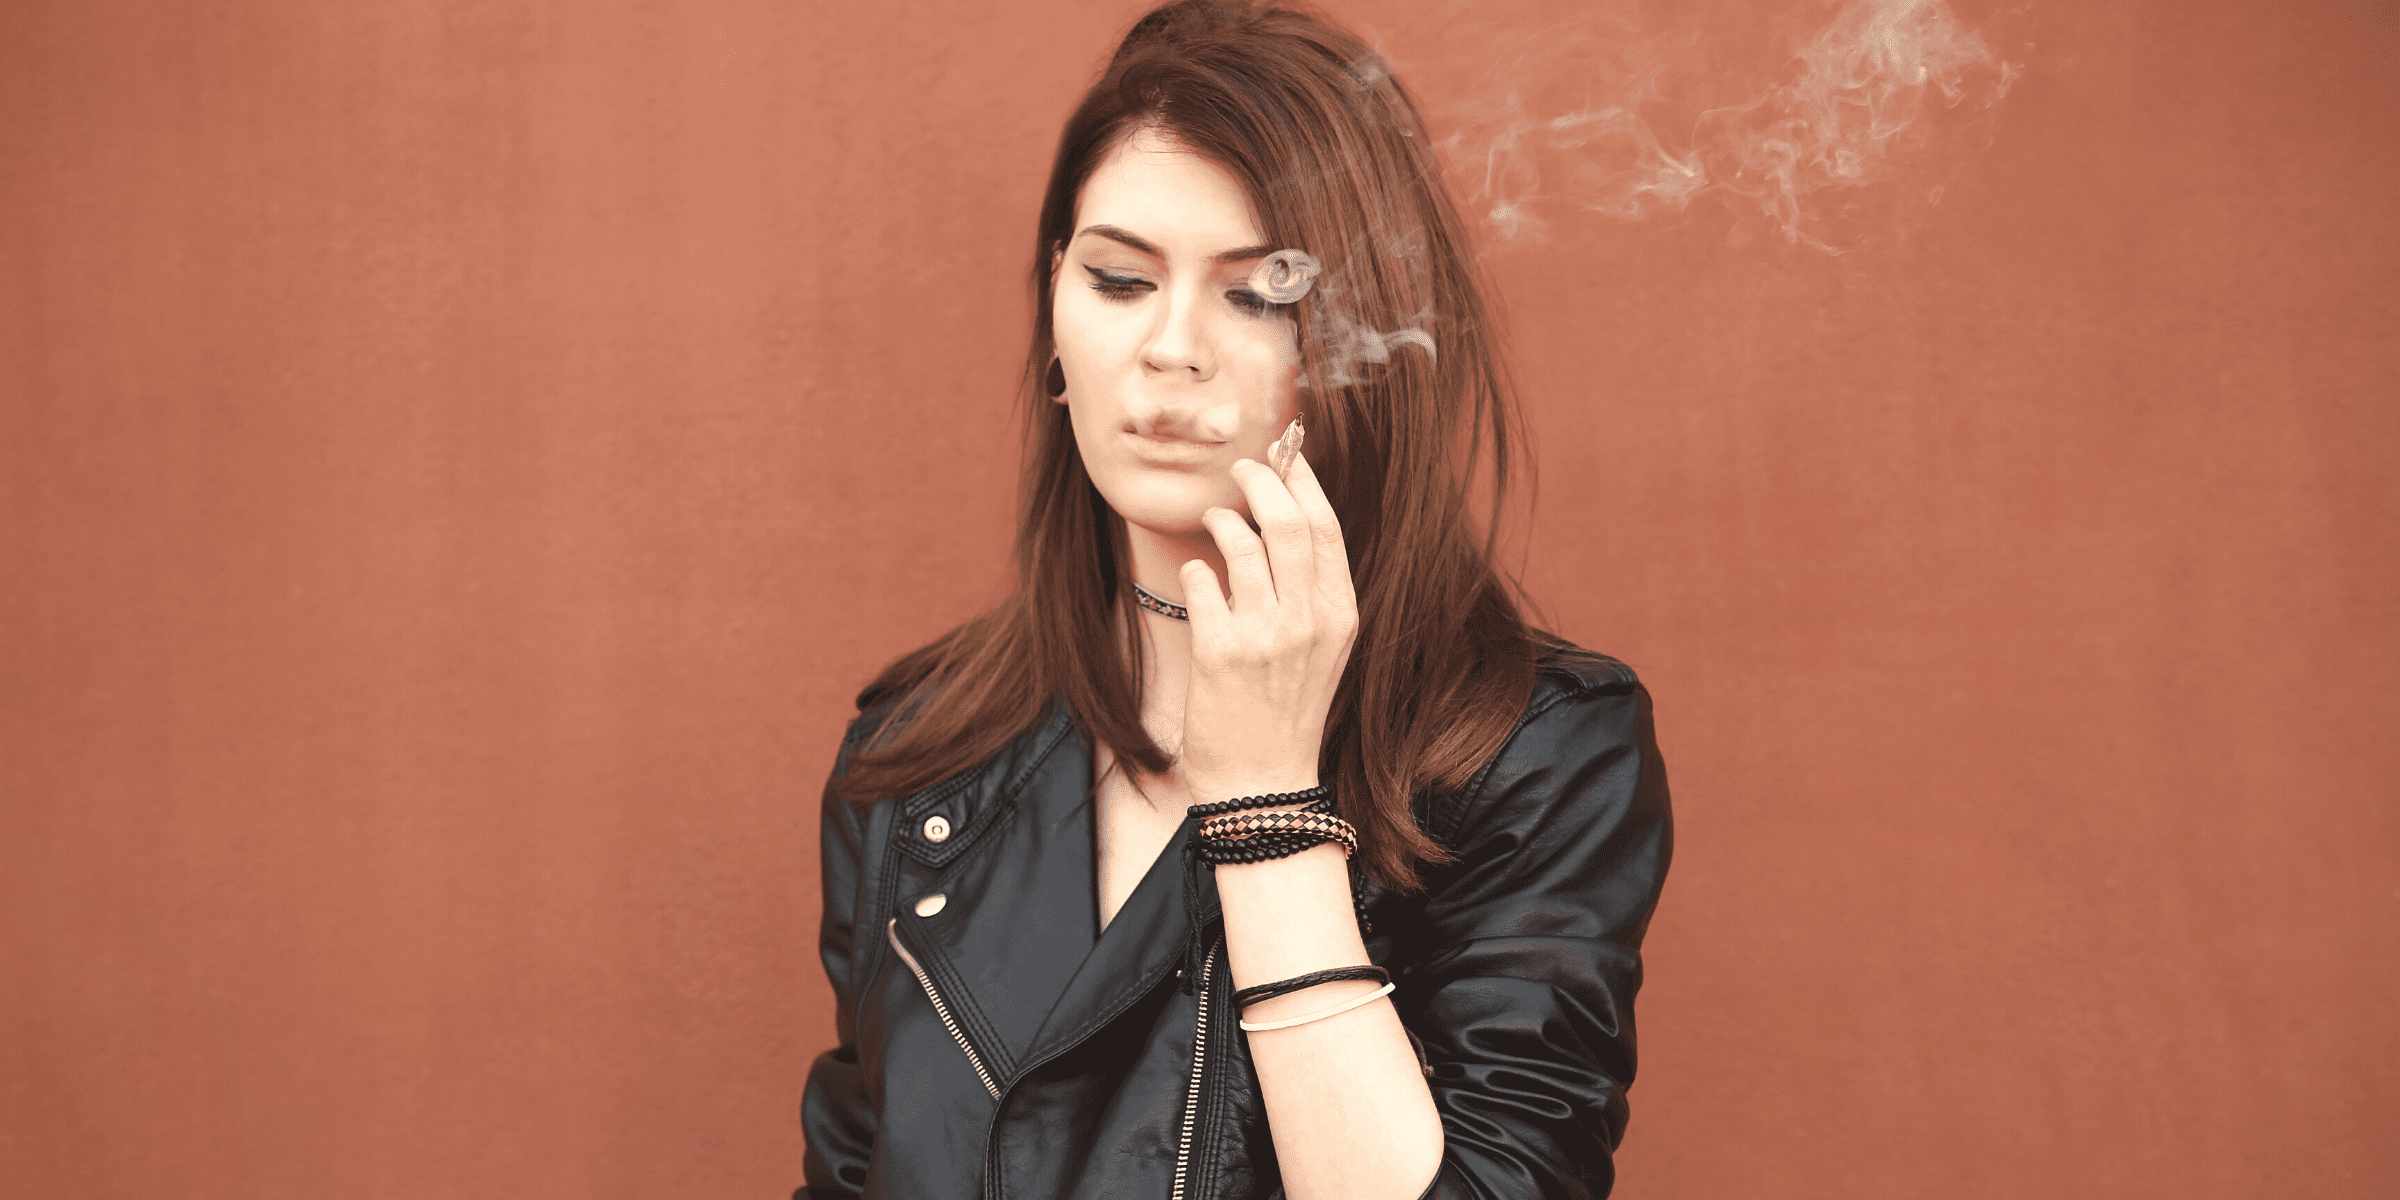 young woman in motorcycle jacket smoking weed via marijuana joint